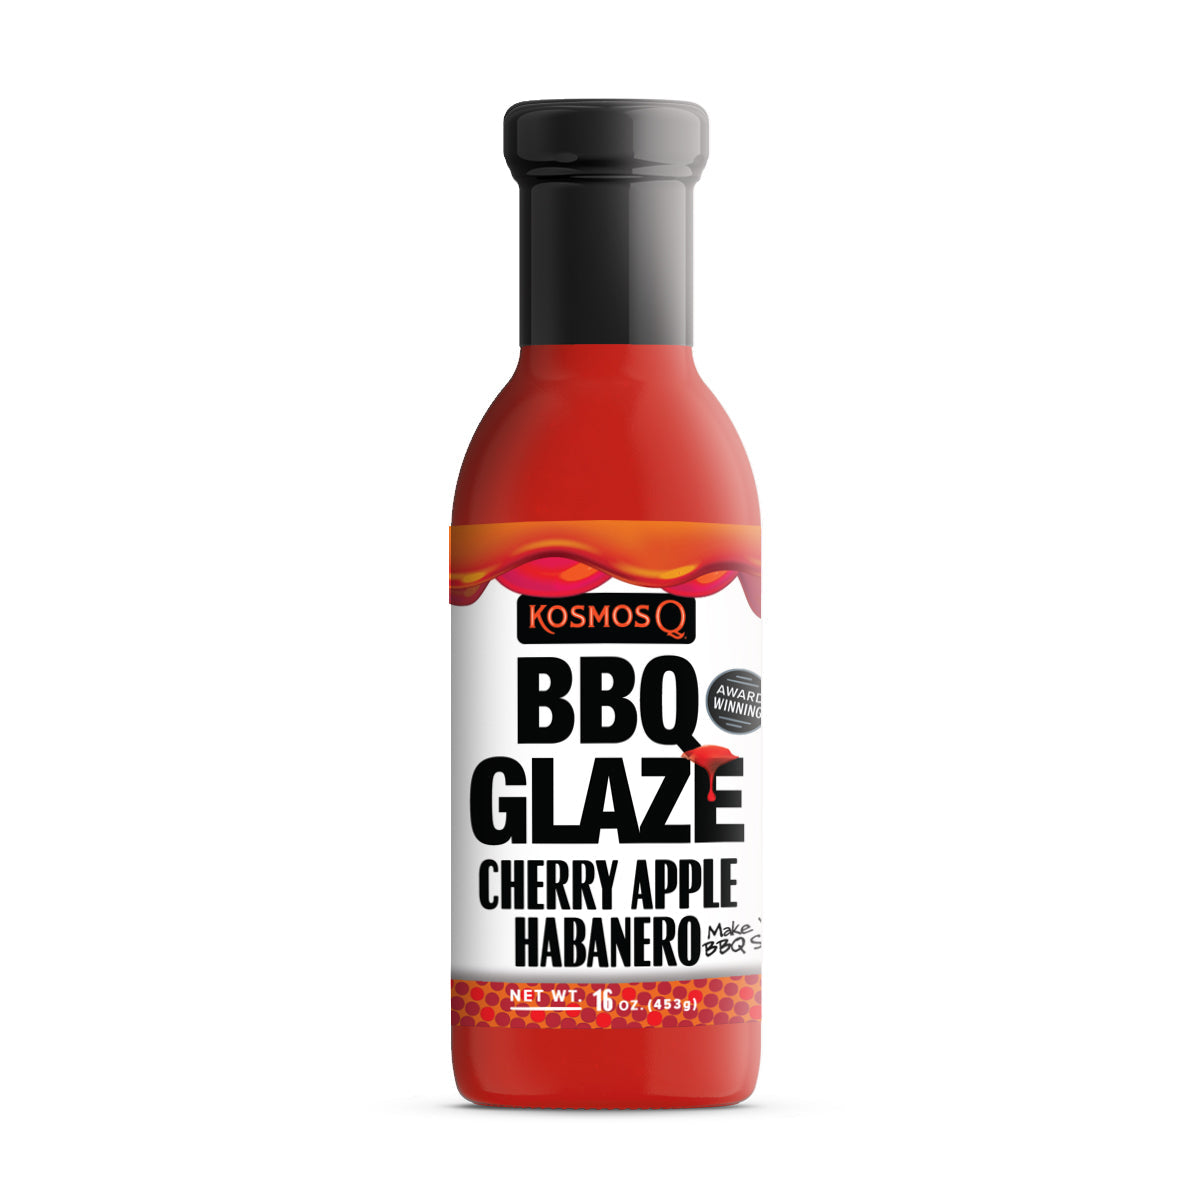 Kosmo's Q Rib Glaze™ Single Bottle Cherry Apple Habanero BBQ Glaze